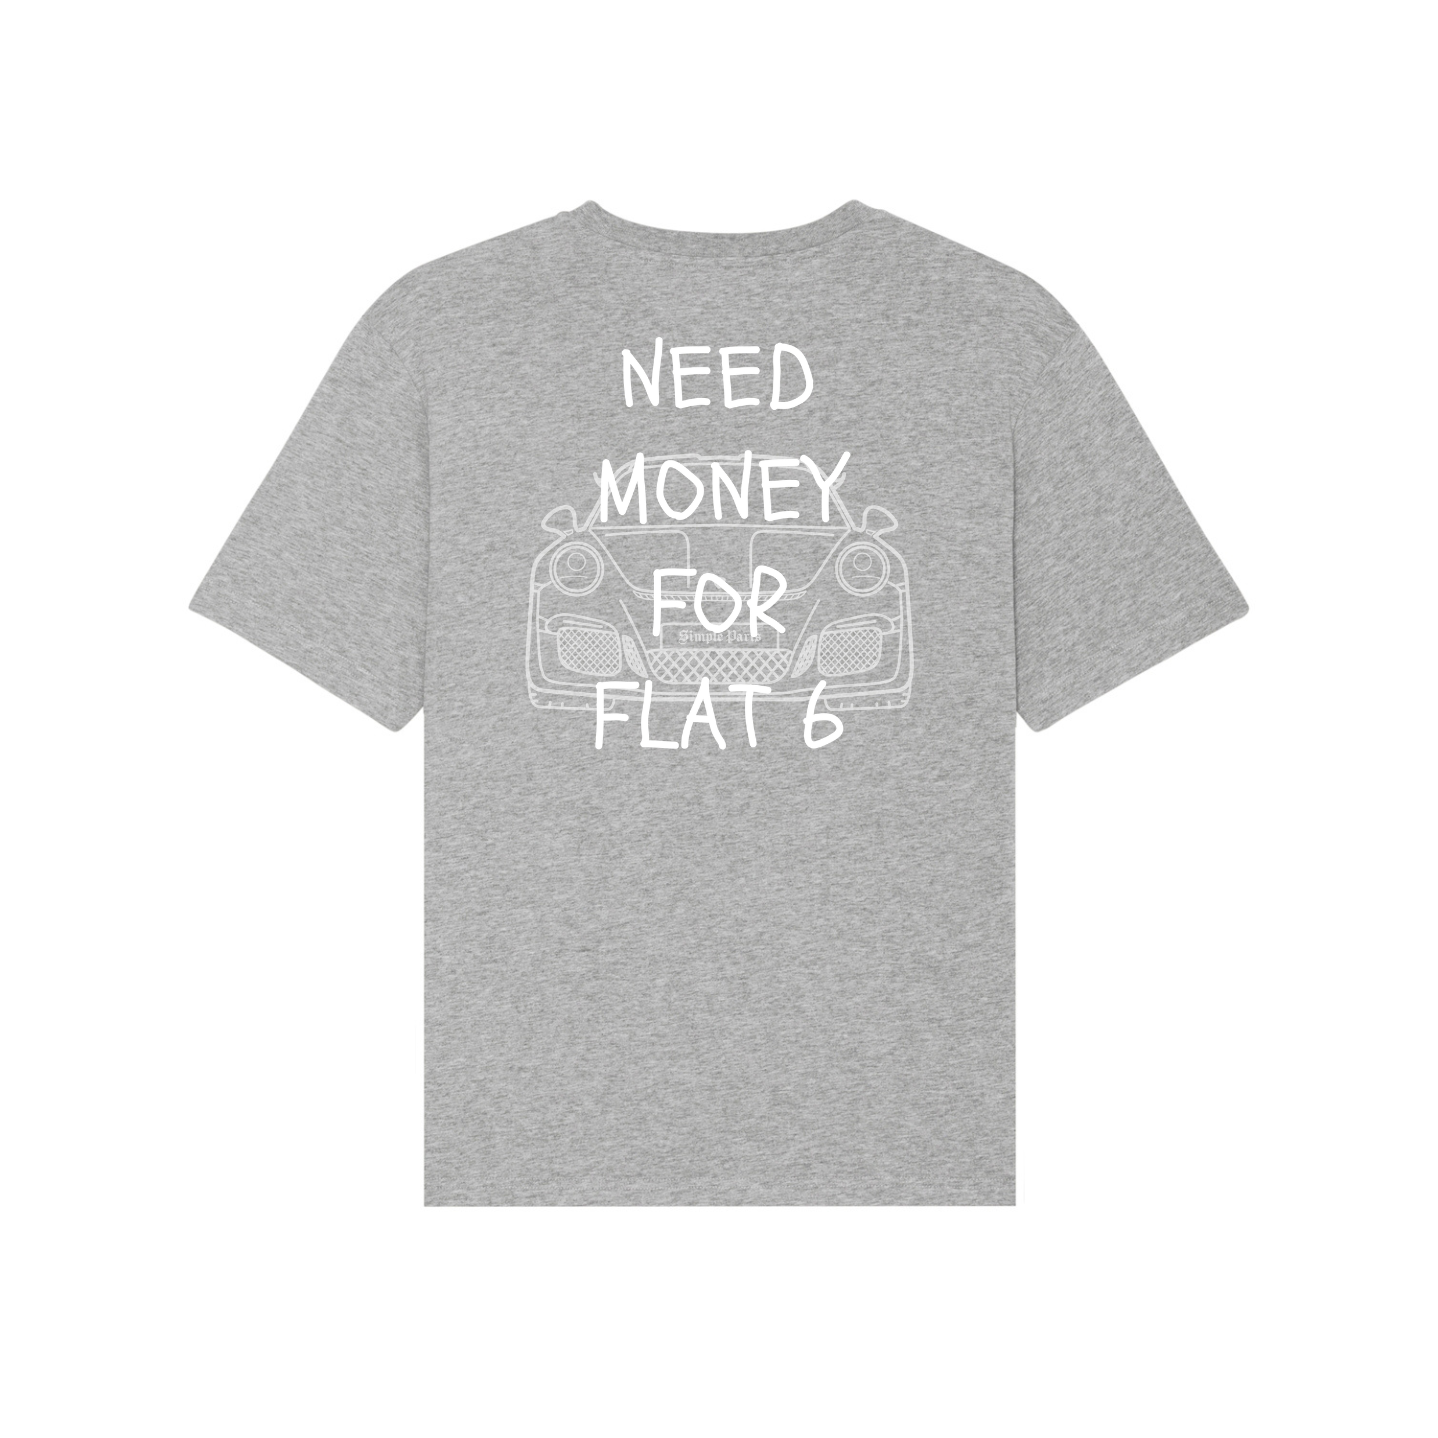 FLAT 6 (t-shirt)